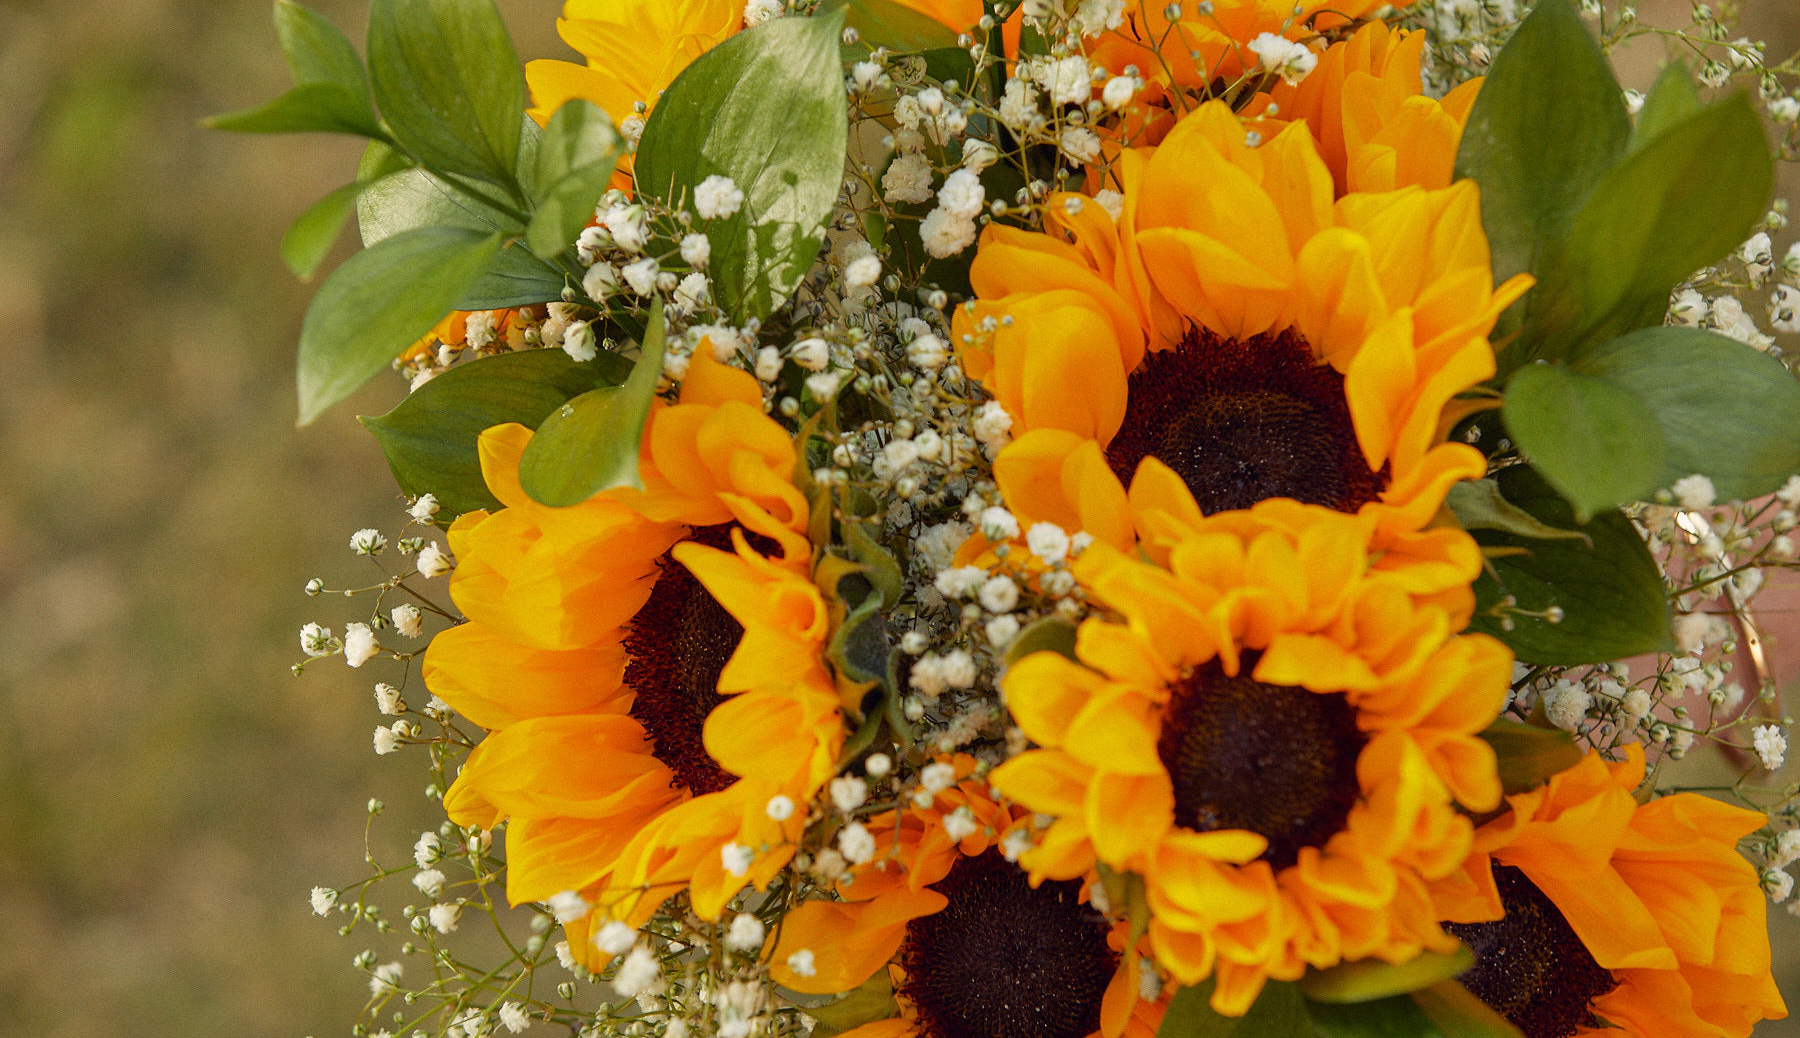 Close up of sunflower floral bouquet